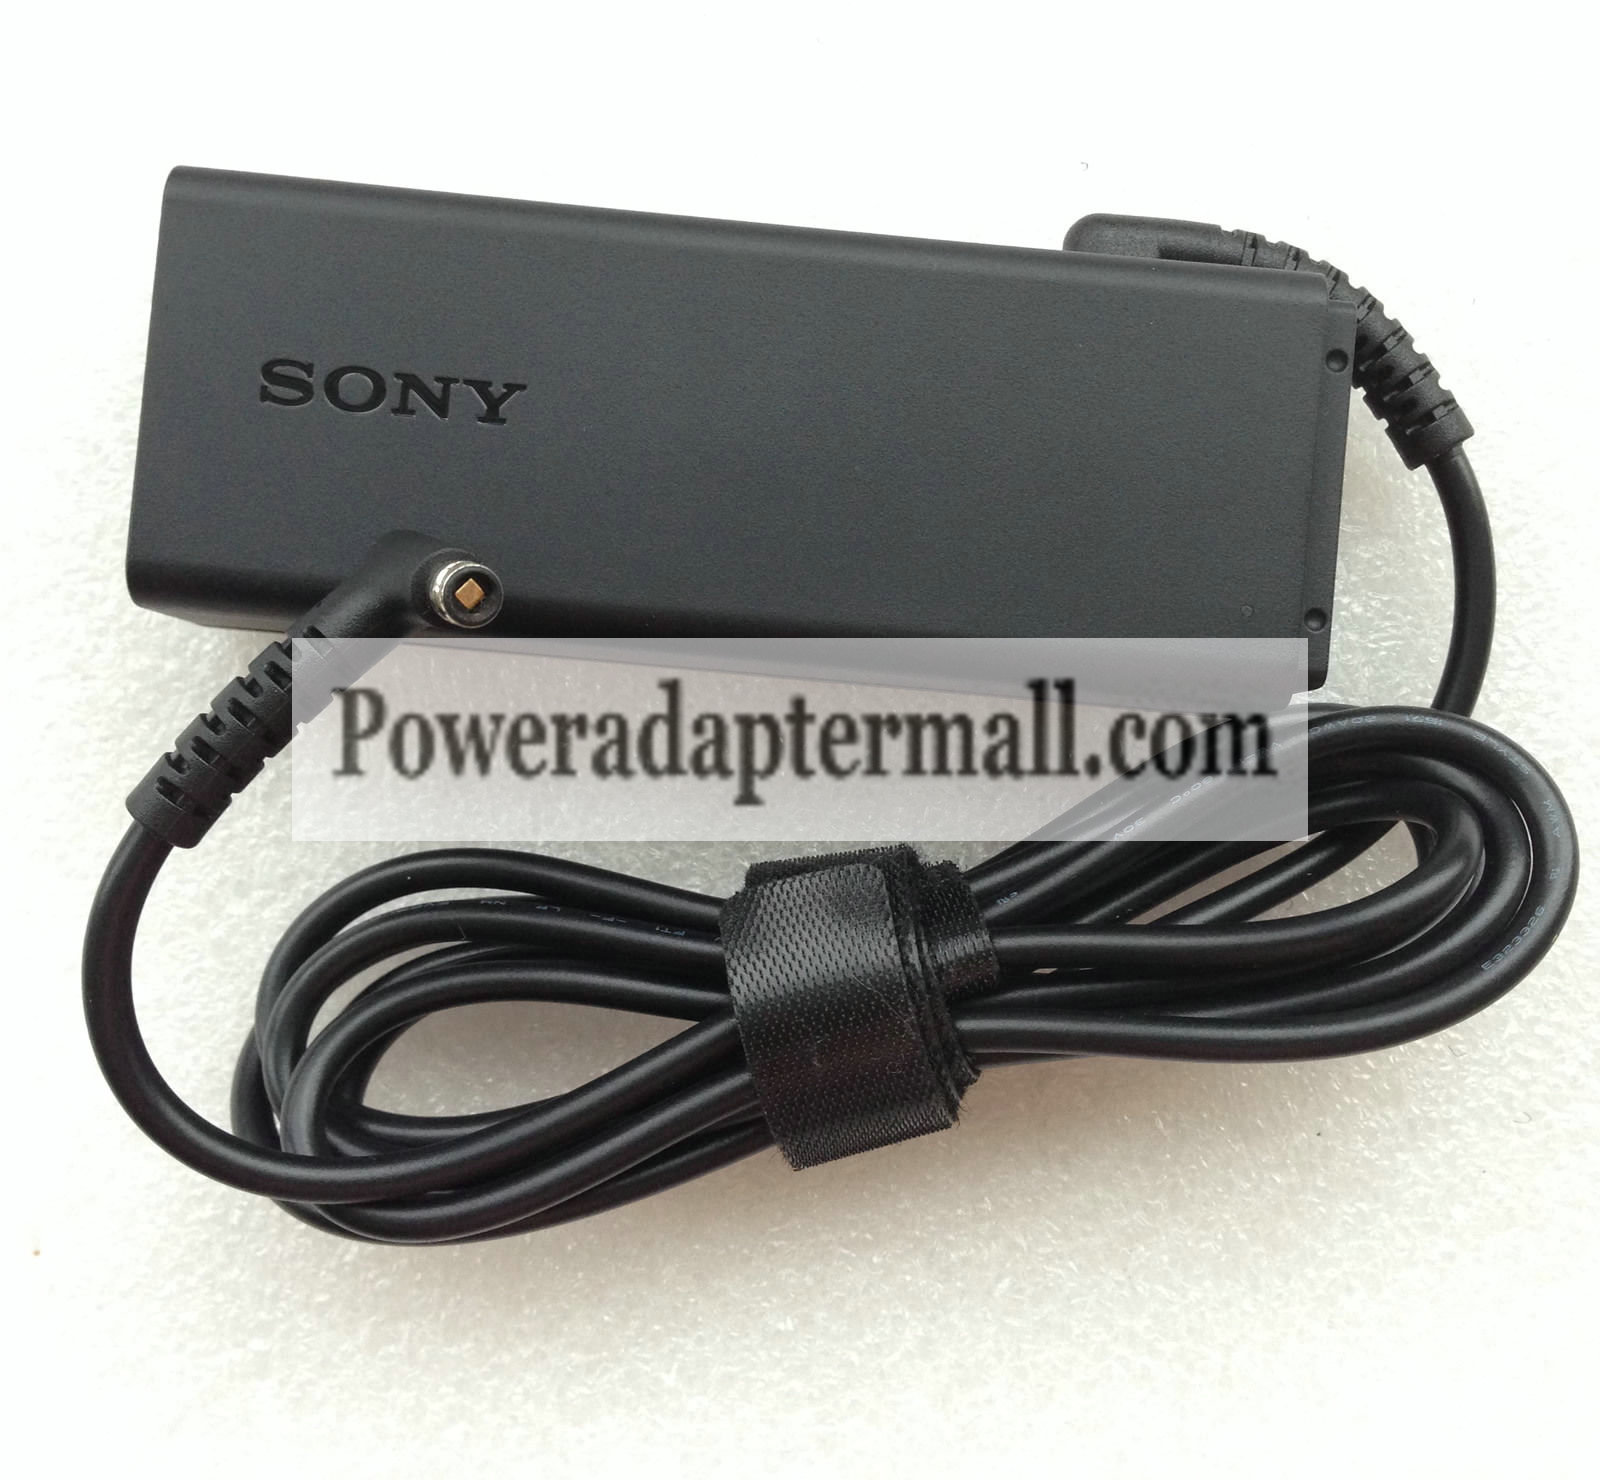 Genuine Sony VAIO Tap 11 SVT1121D4E 19.5V/5V AC Adapter Charger